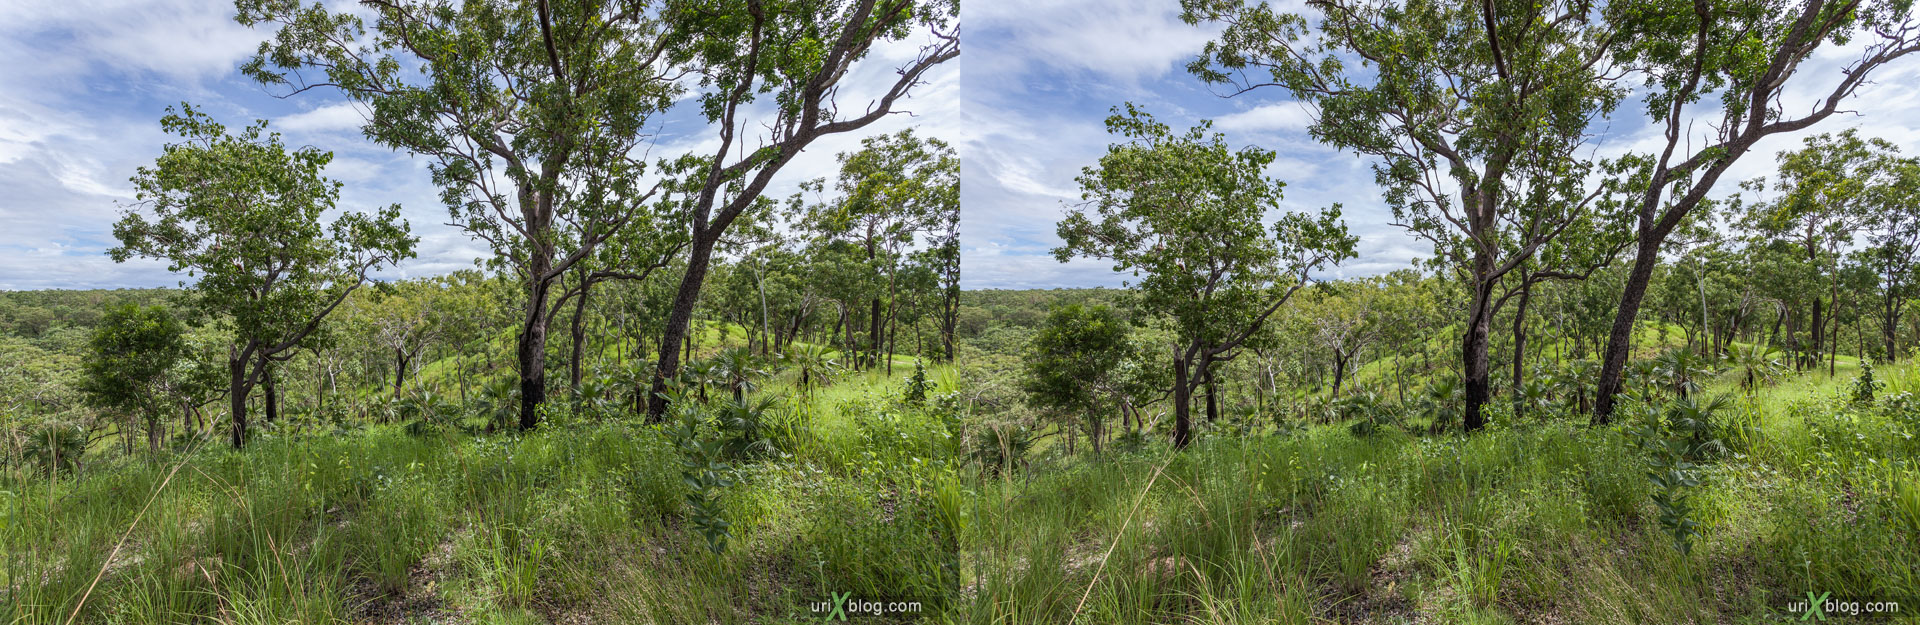 Kakadu National Park, Northern Territory, Australia, 3D, stereo pair, cross-eyed, crossview, cross view stereo pair, stereoscopic, 2011